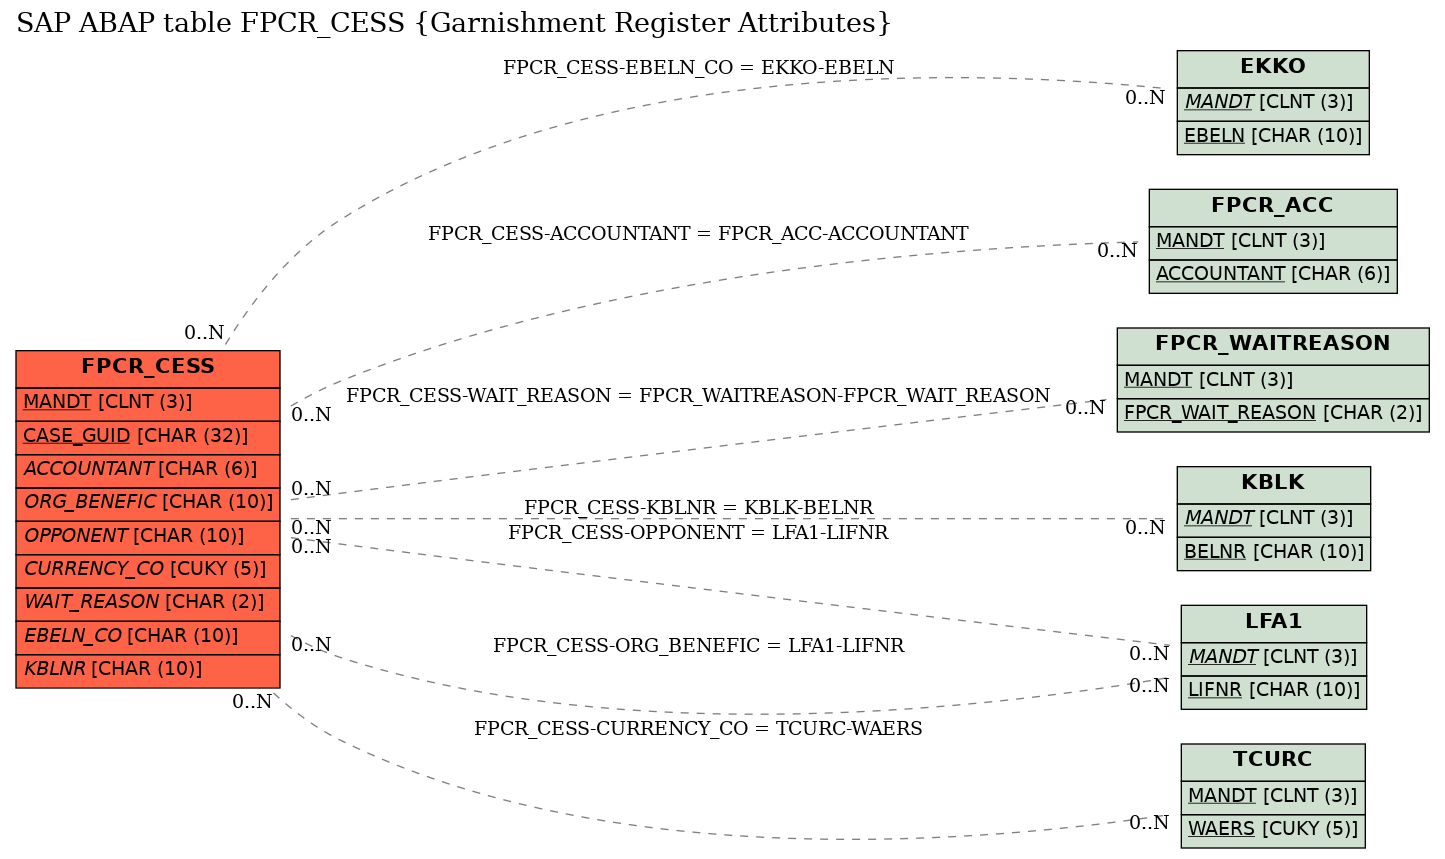 E-R Diagram for table FPCR_CESS (Garnishment Register Attributes)